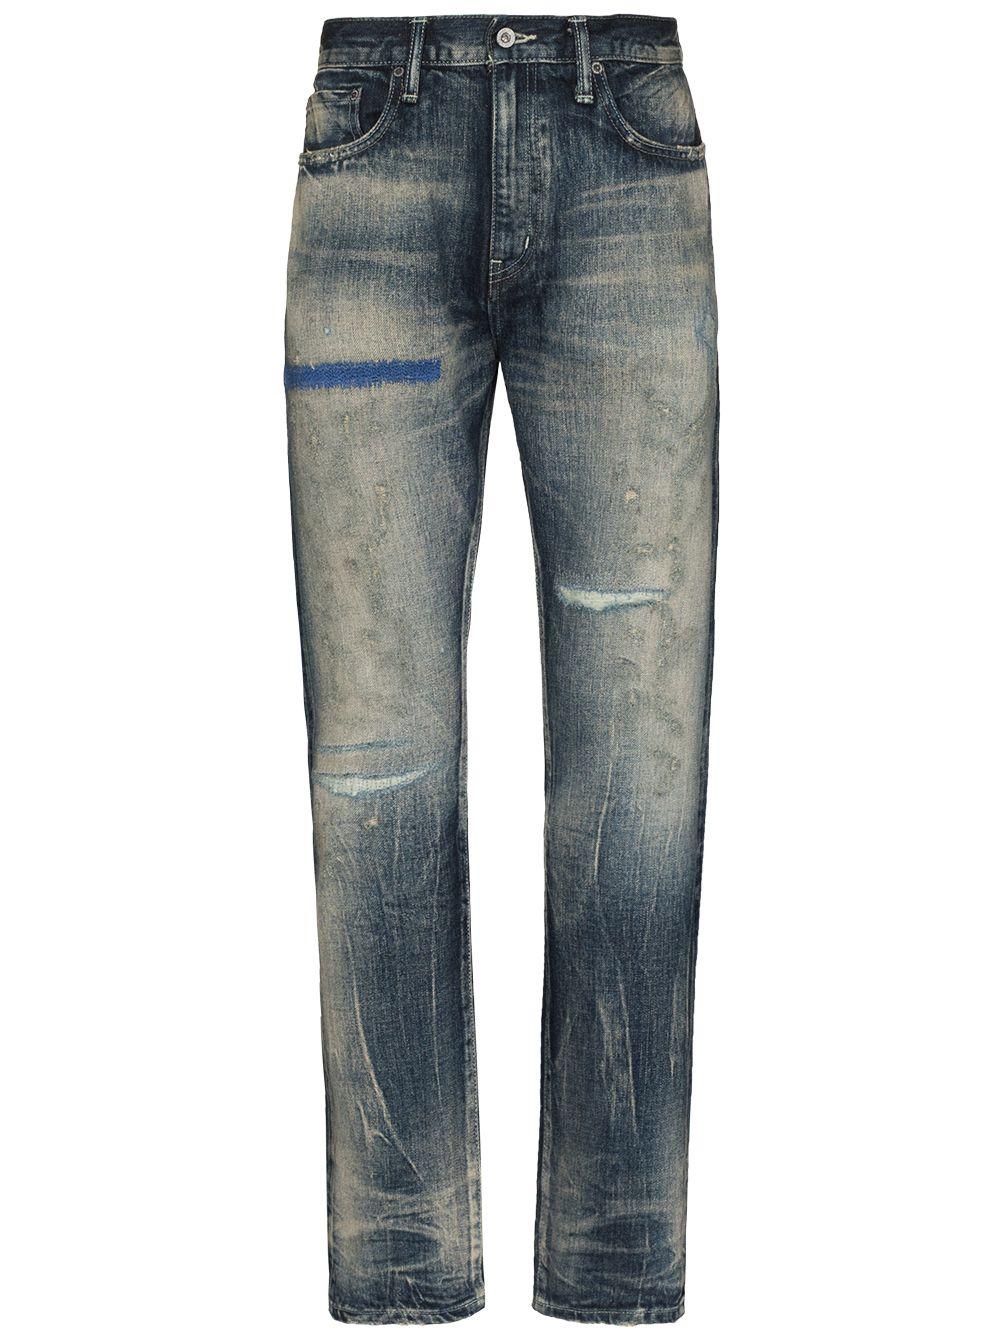 Neighborhood Denim Savage Straight-leg Jeans in Blue for Men - Lyst